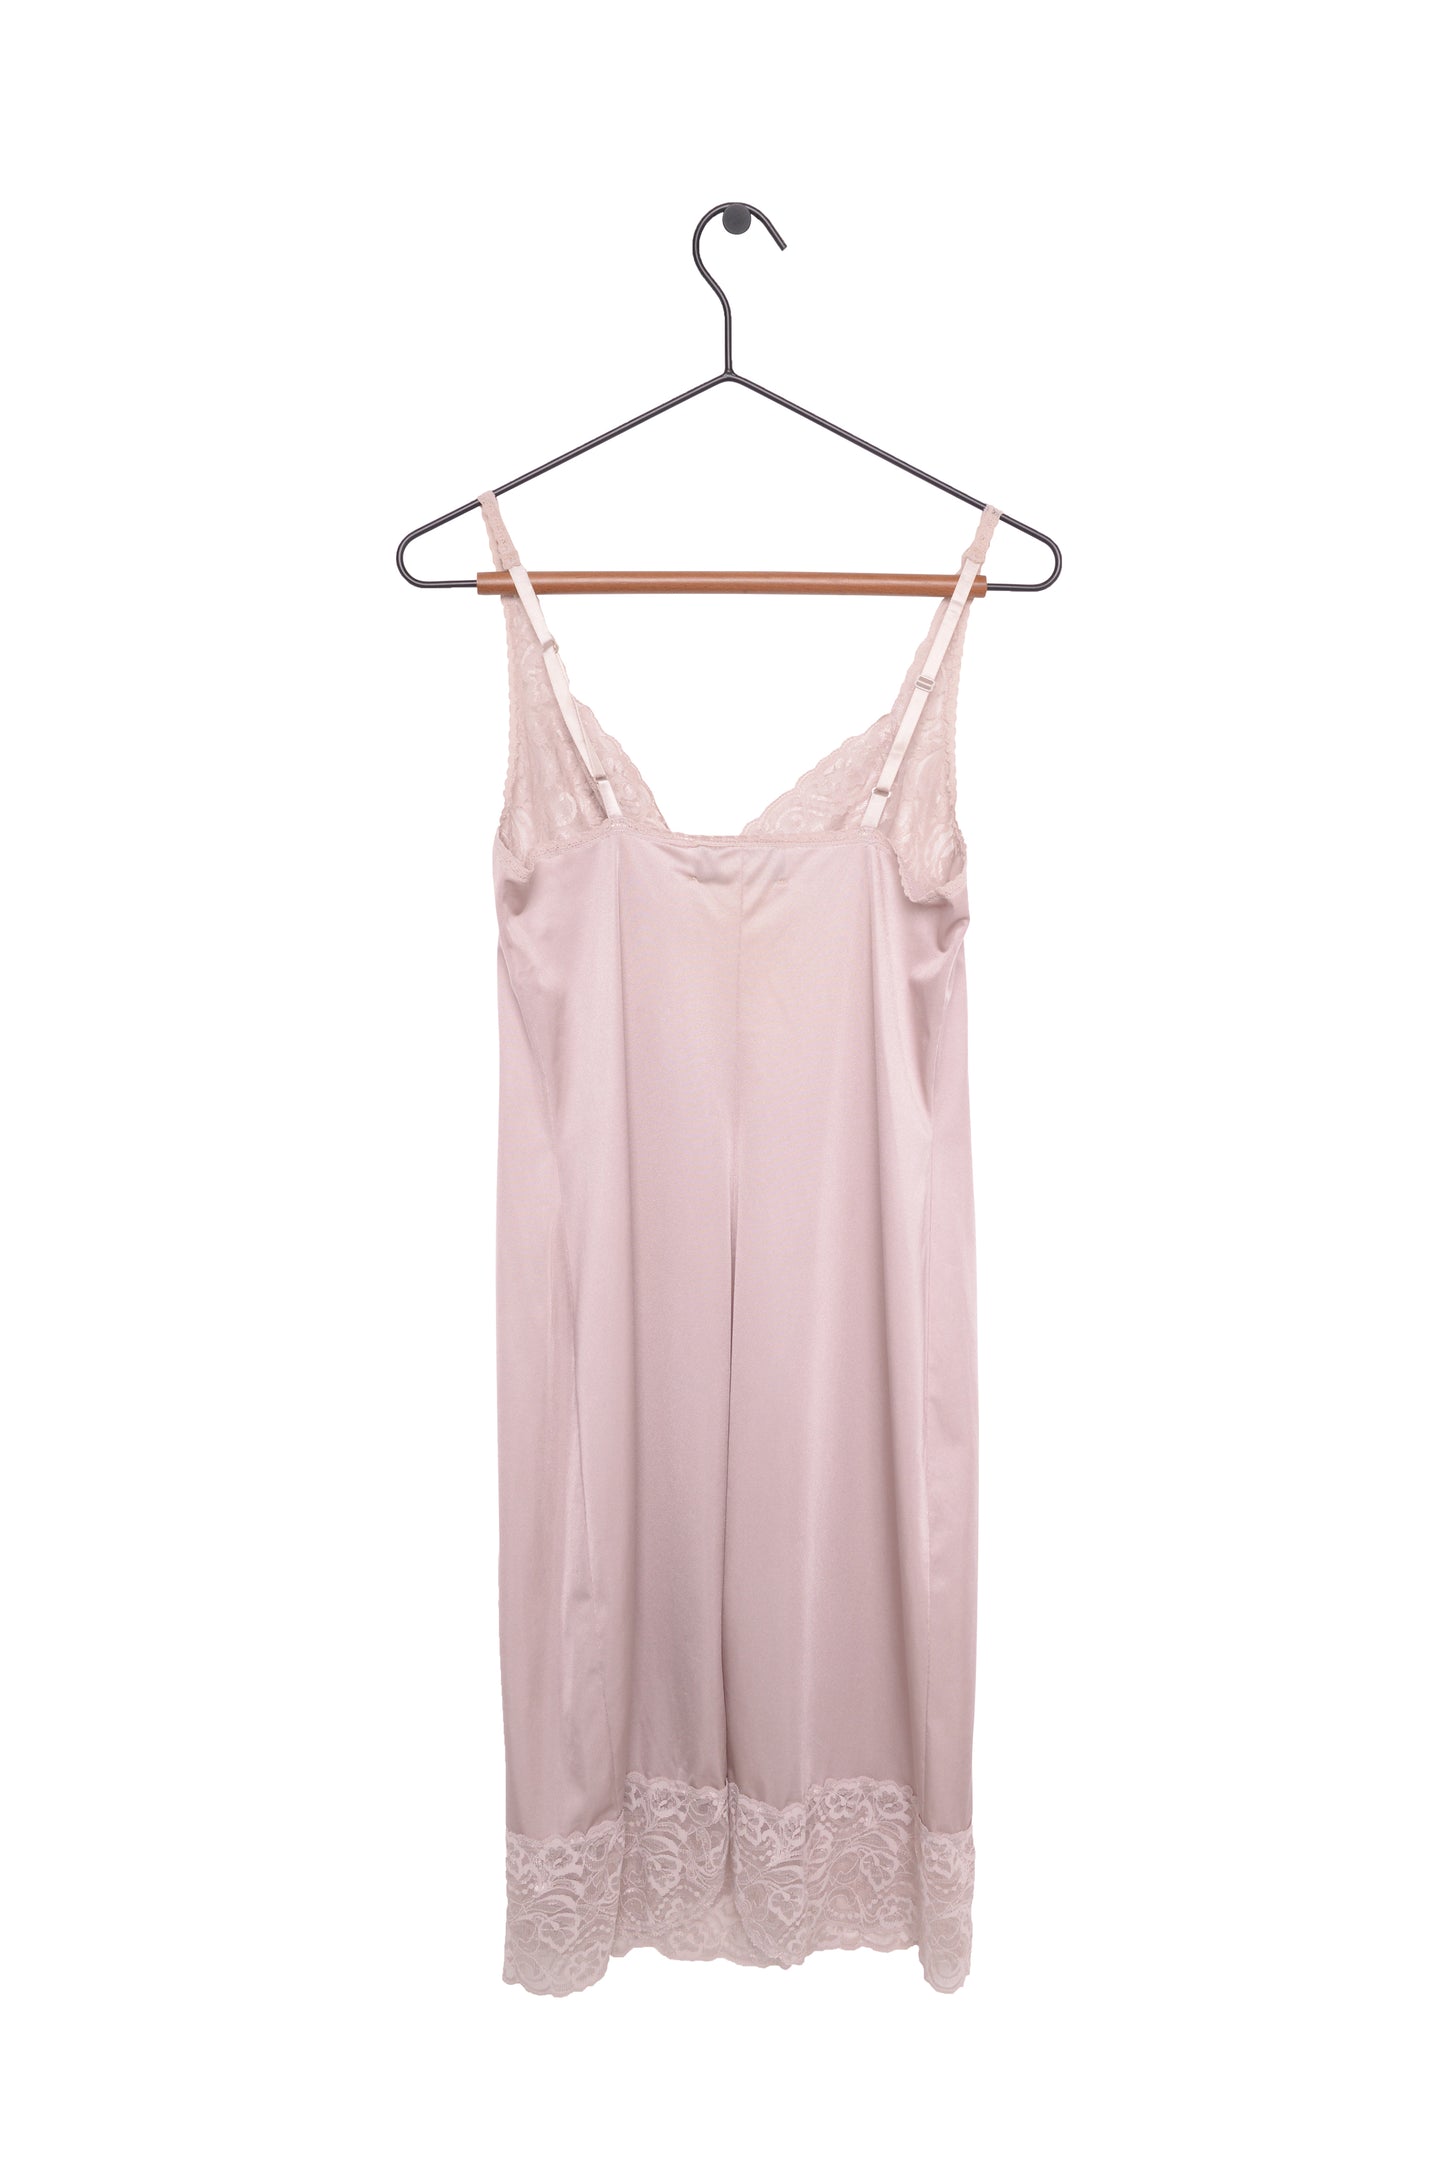 1960s Lace Trim Slip Dress USA